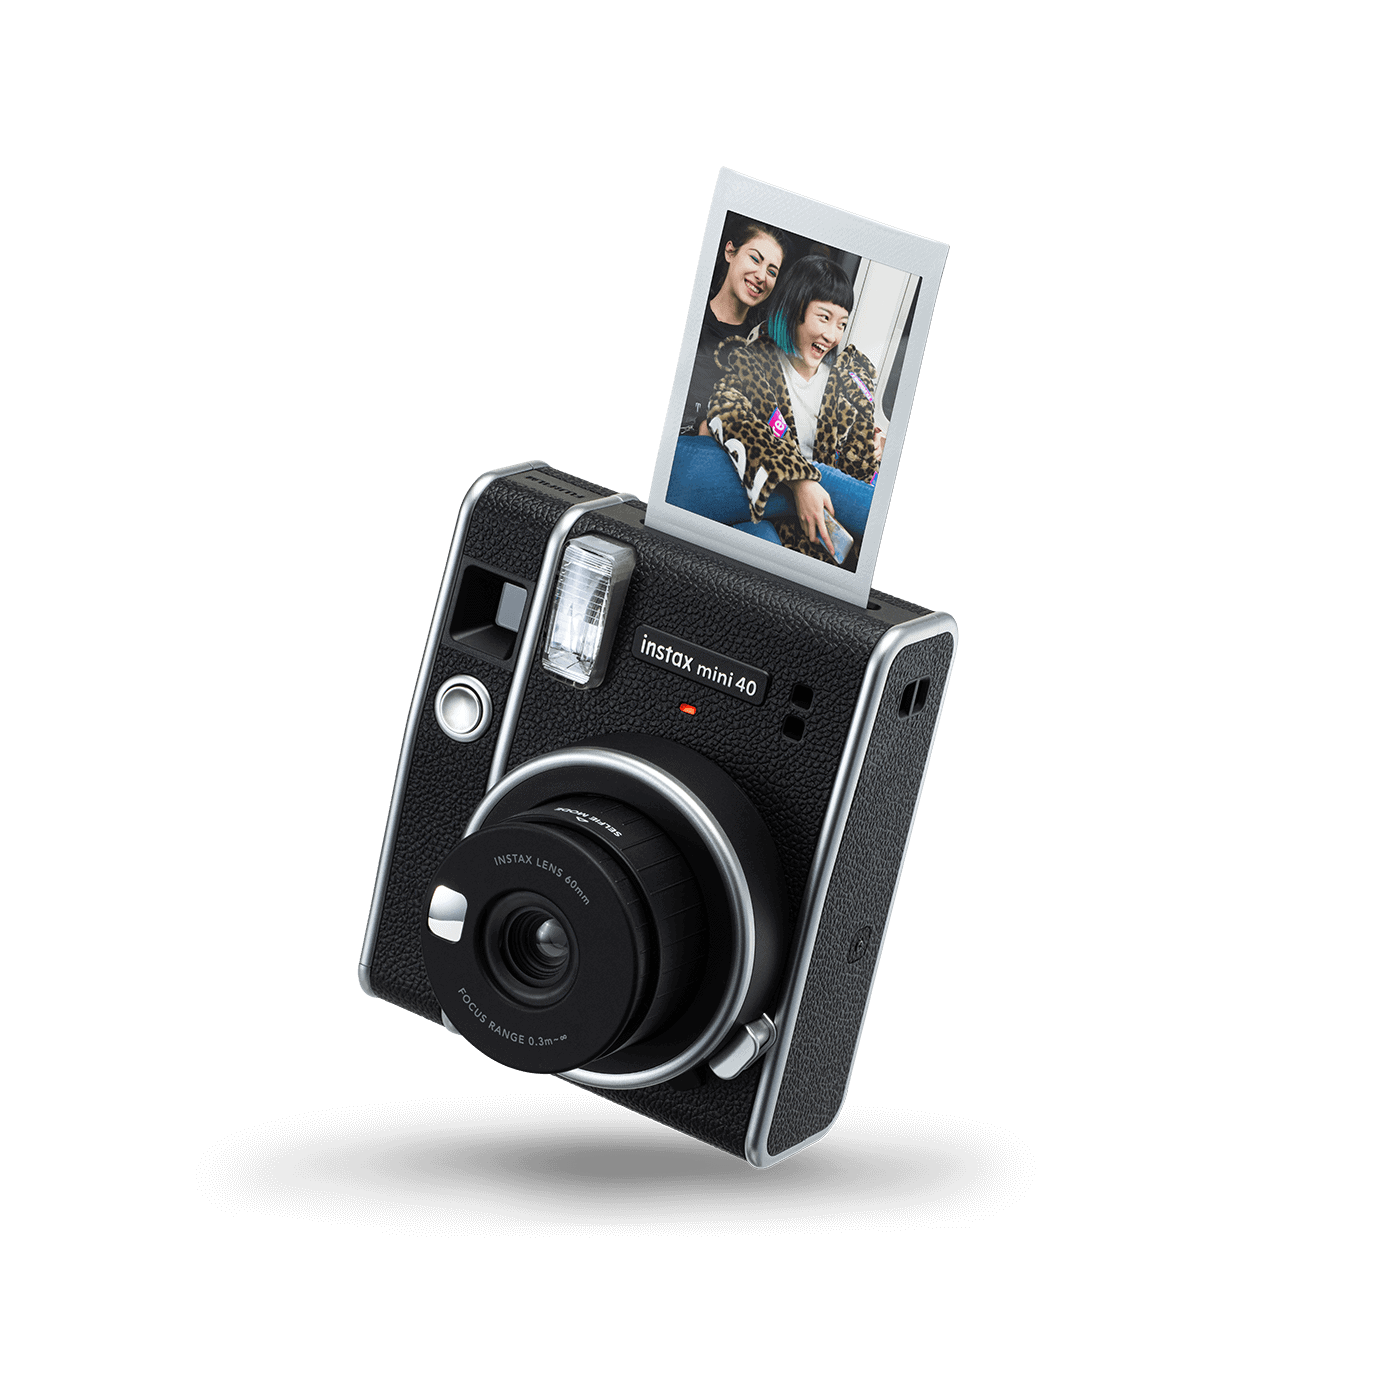 Instax Mini Evo Instant Film Camera - Black : Target